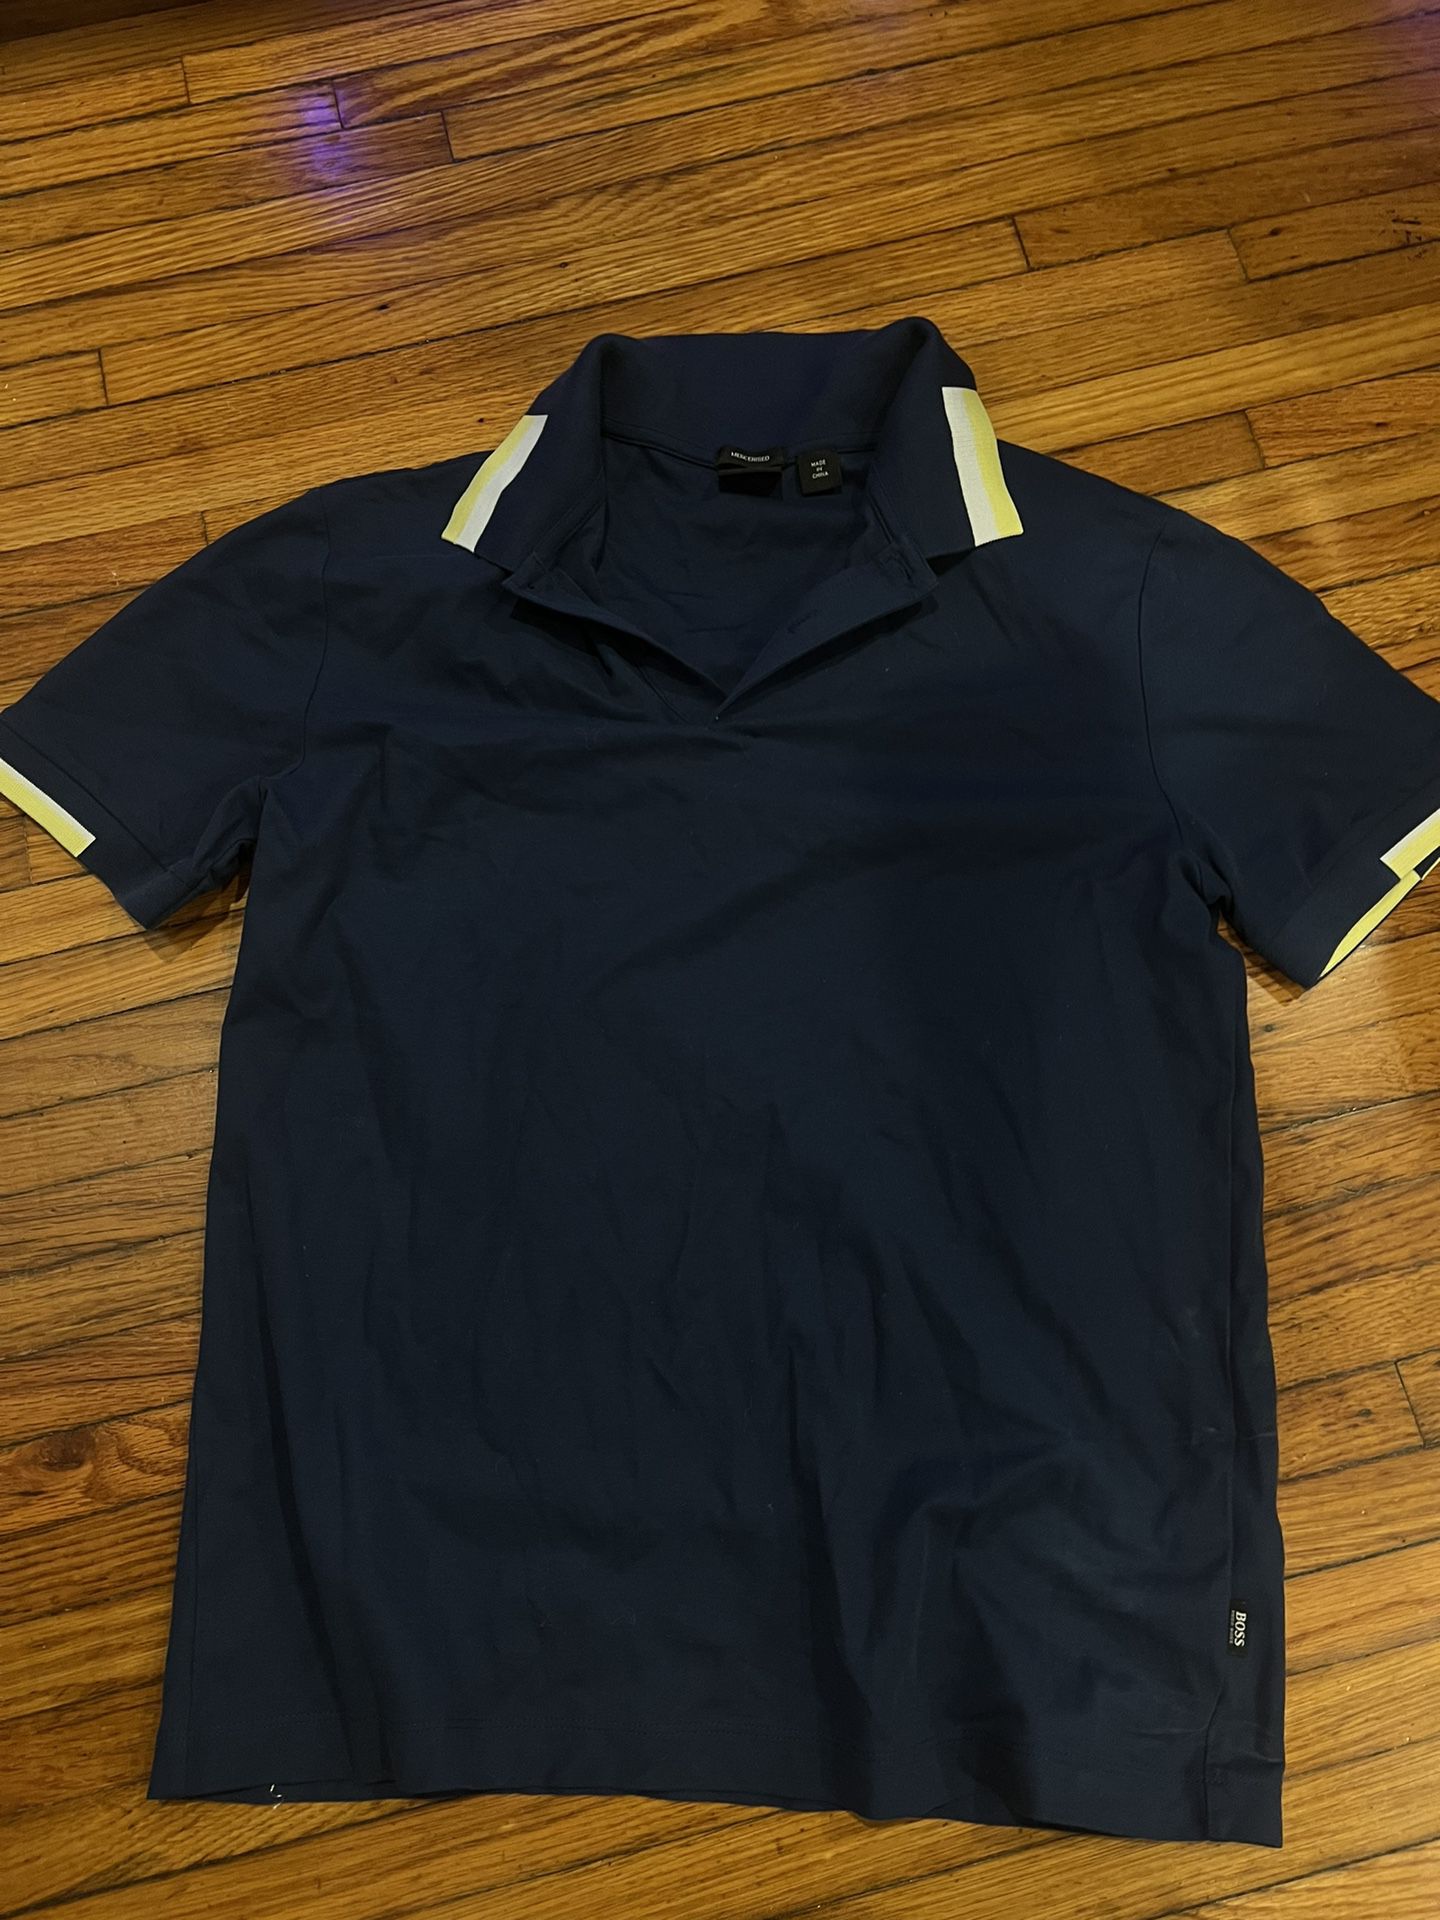 Hugo Boss Dress Shirt Size Medium 